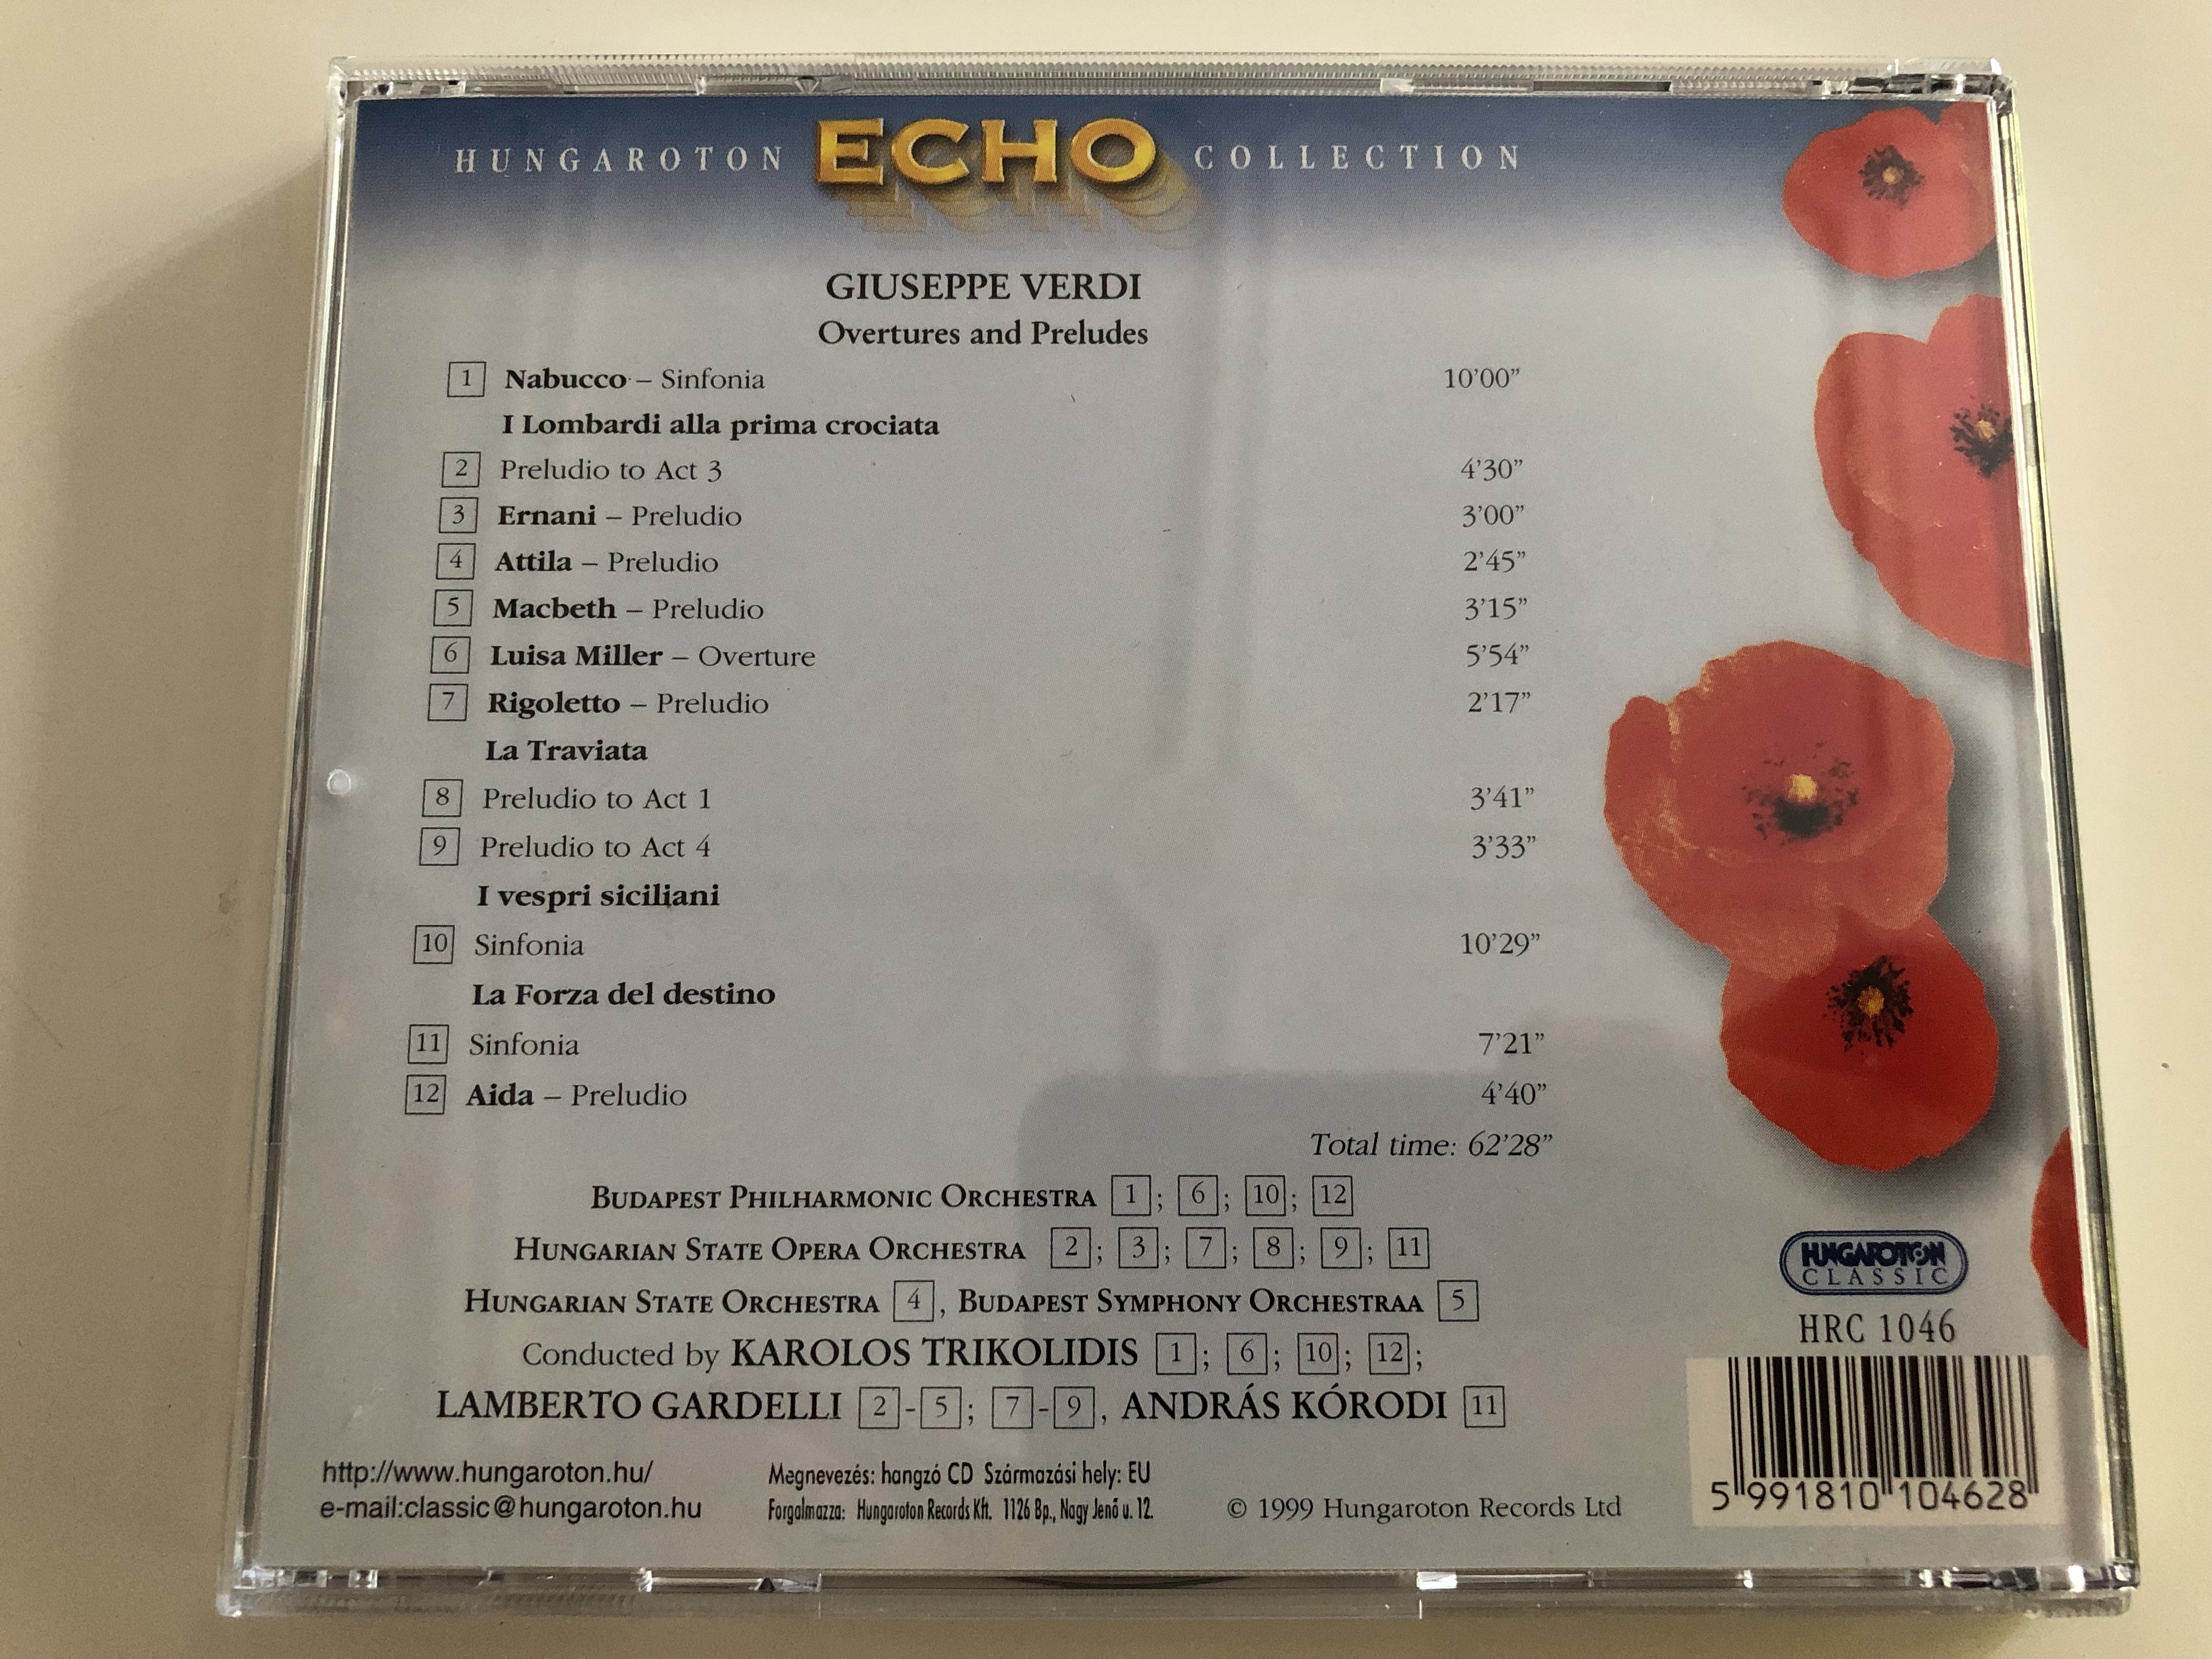 -verdi-overtures-nabucco-i-lombardi-ernani-attila-macbeth-rigoletto-la-traviata-aida-trikolidis-gardelli-k-rodi-hungaroton-echo-collection-audio-cd-1999-hrc-1046-4-.jpg